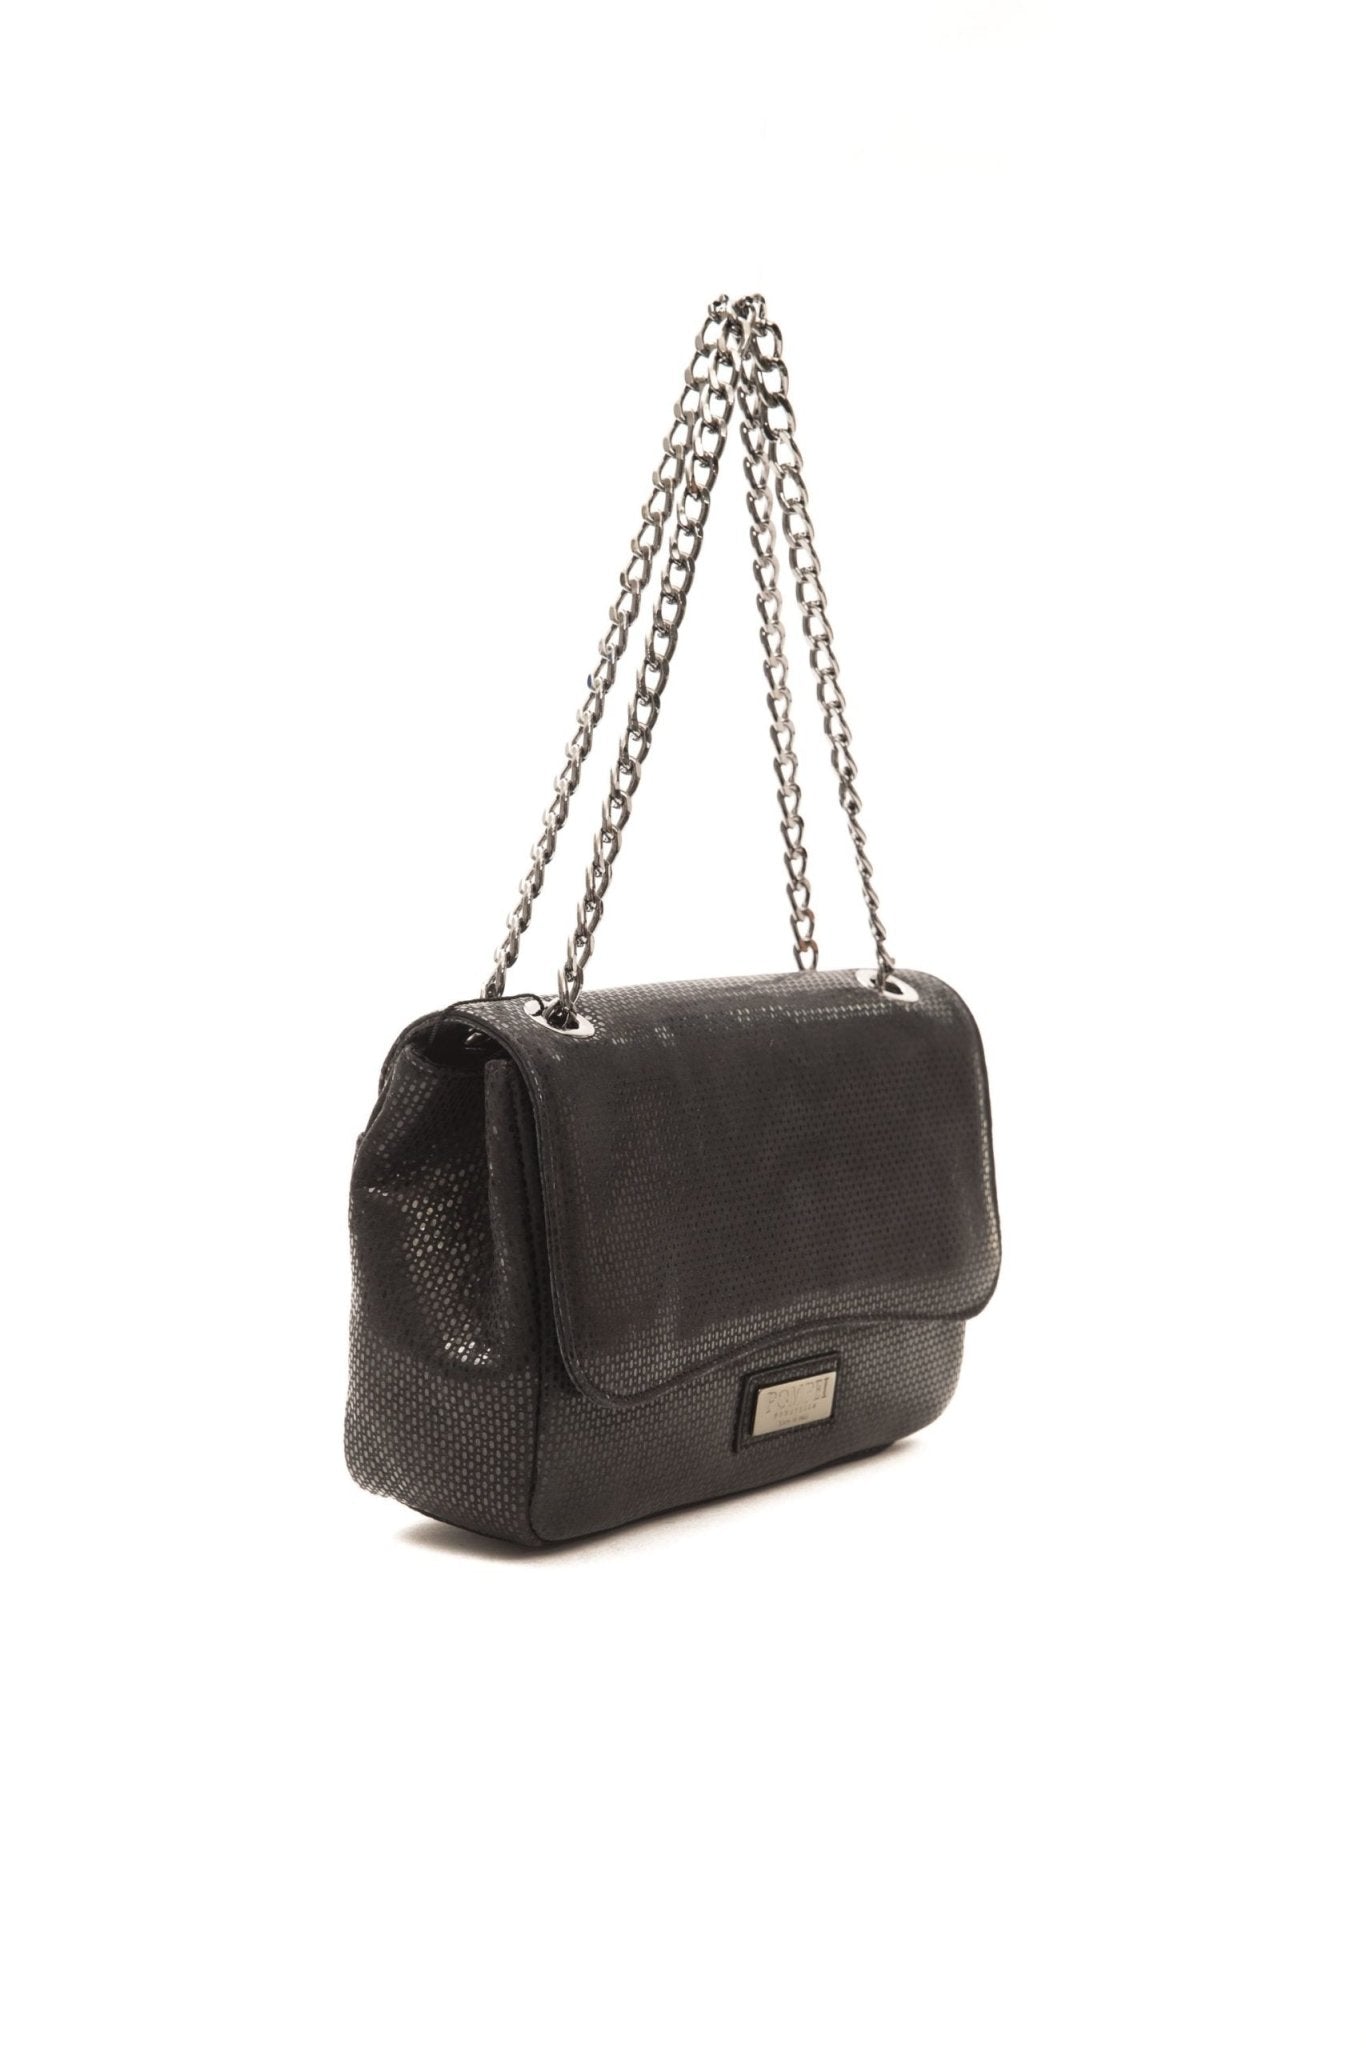 Pompei Donatella Black Leather Crossbody Bag - Fizigo